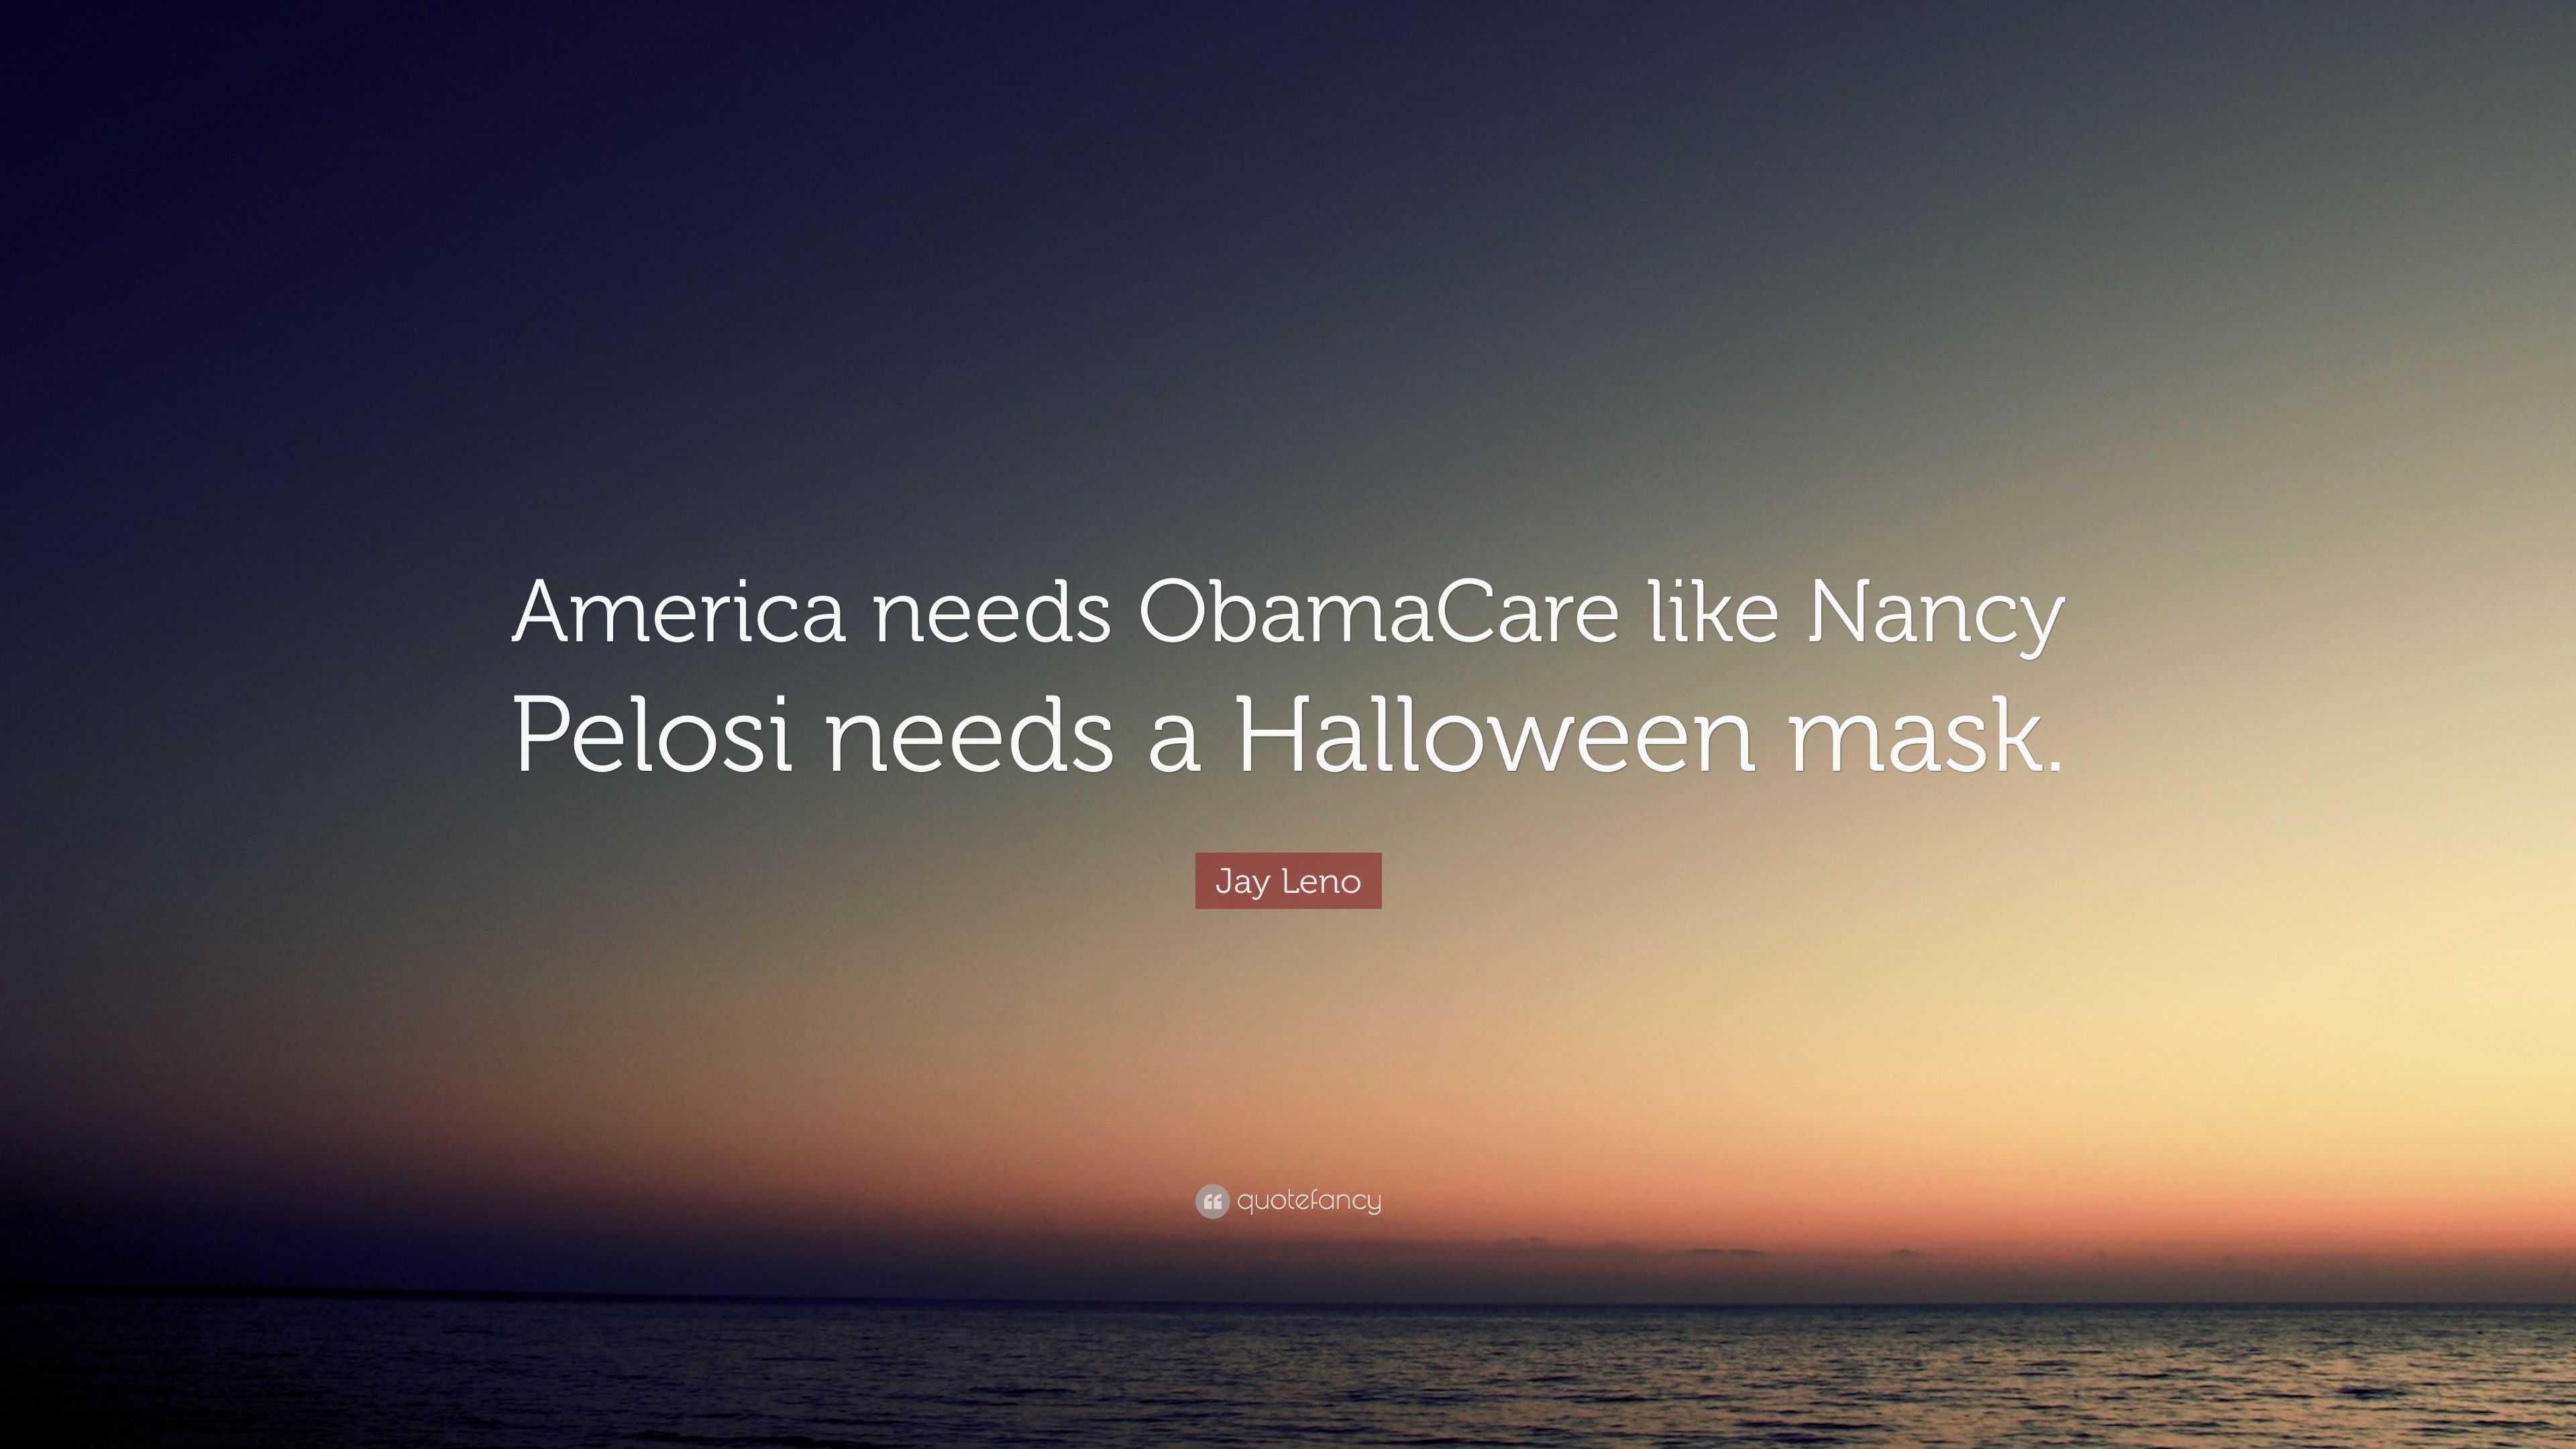 Jay Leno Quote: “America needs ObamaCare like Nancy Pelosi needs a Halloween mask ...3840 x 2160